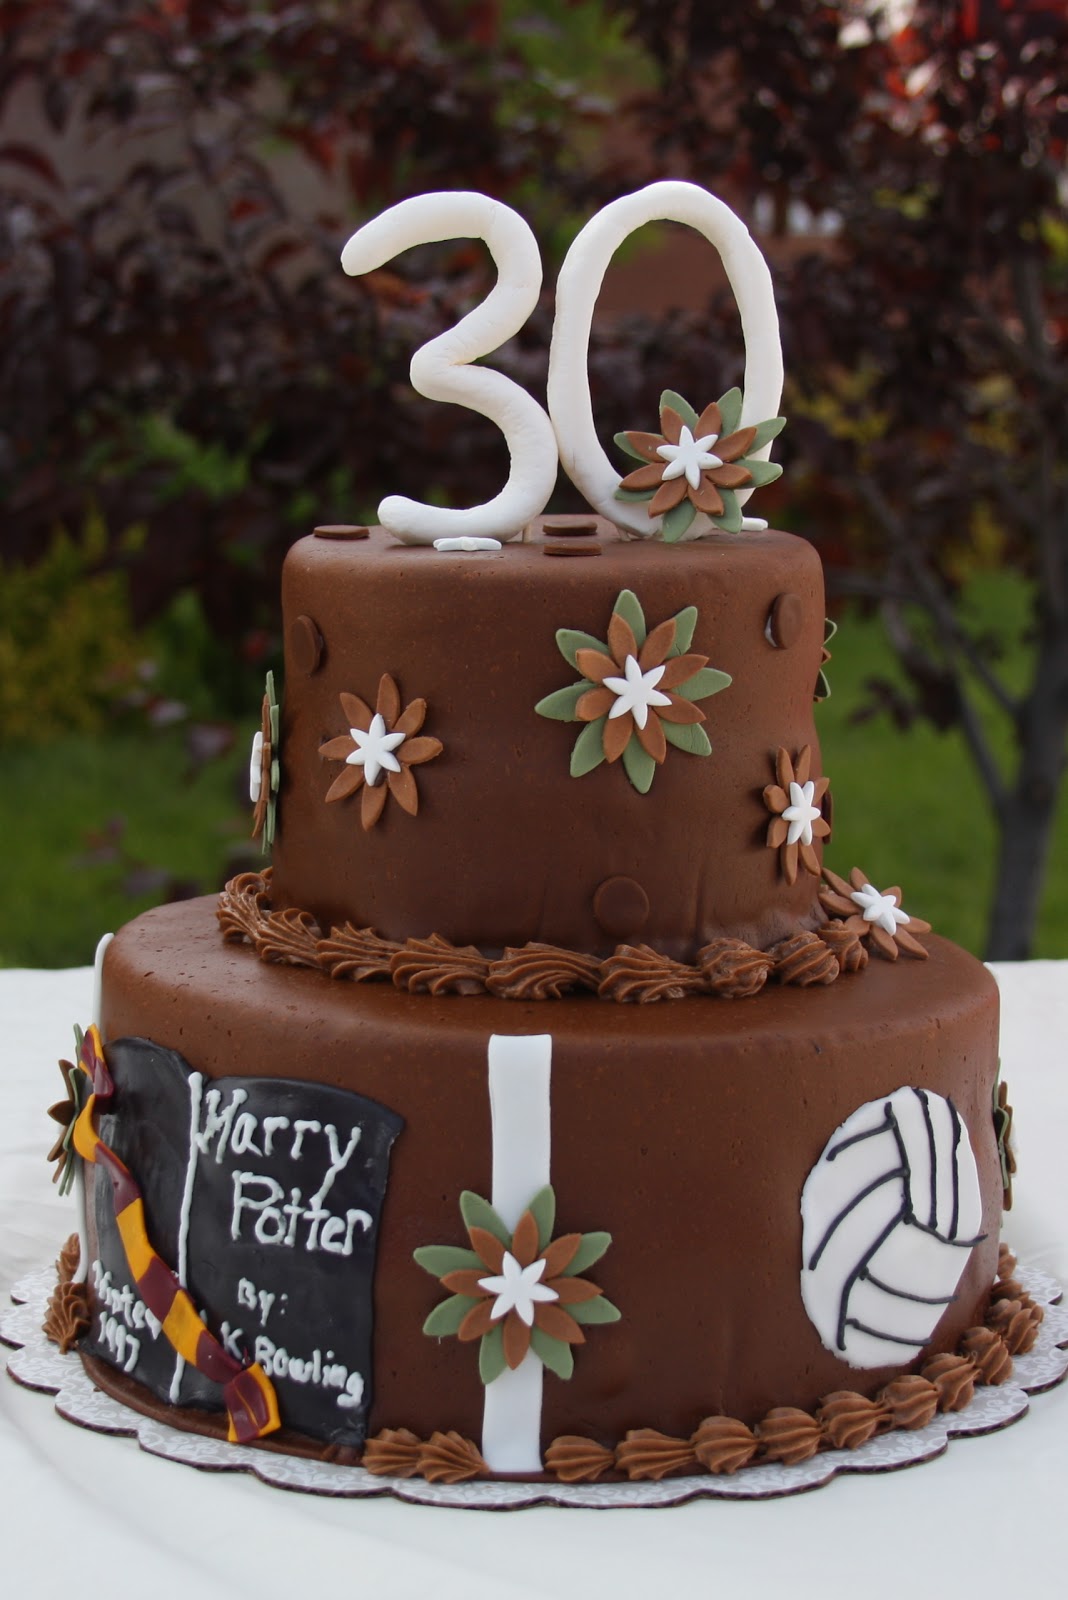 30th Birthday Cake Decorations - A Birthday Cake